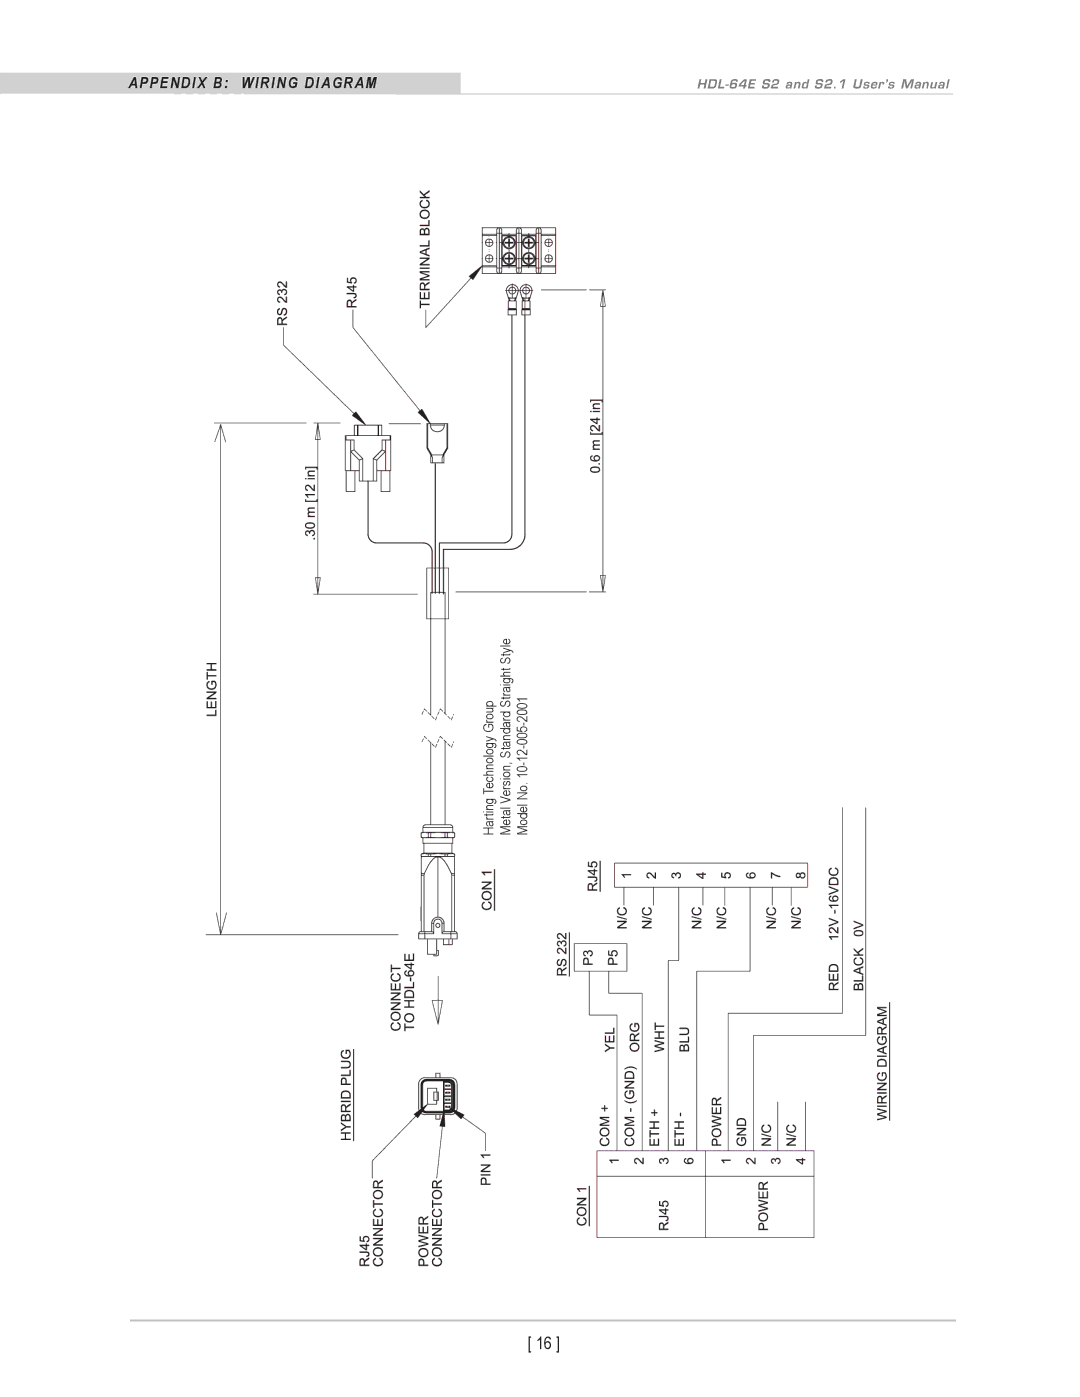 Velodyne Acoustics HDL-64E S2.1 user manual APPendix B WirinG diaGraM 